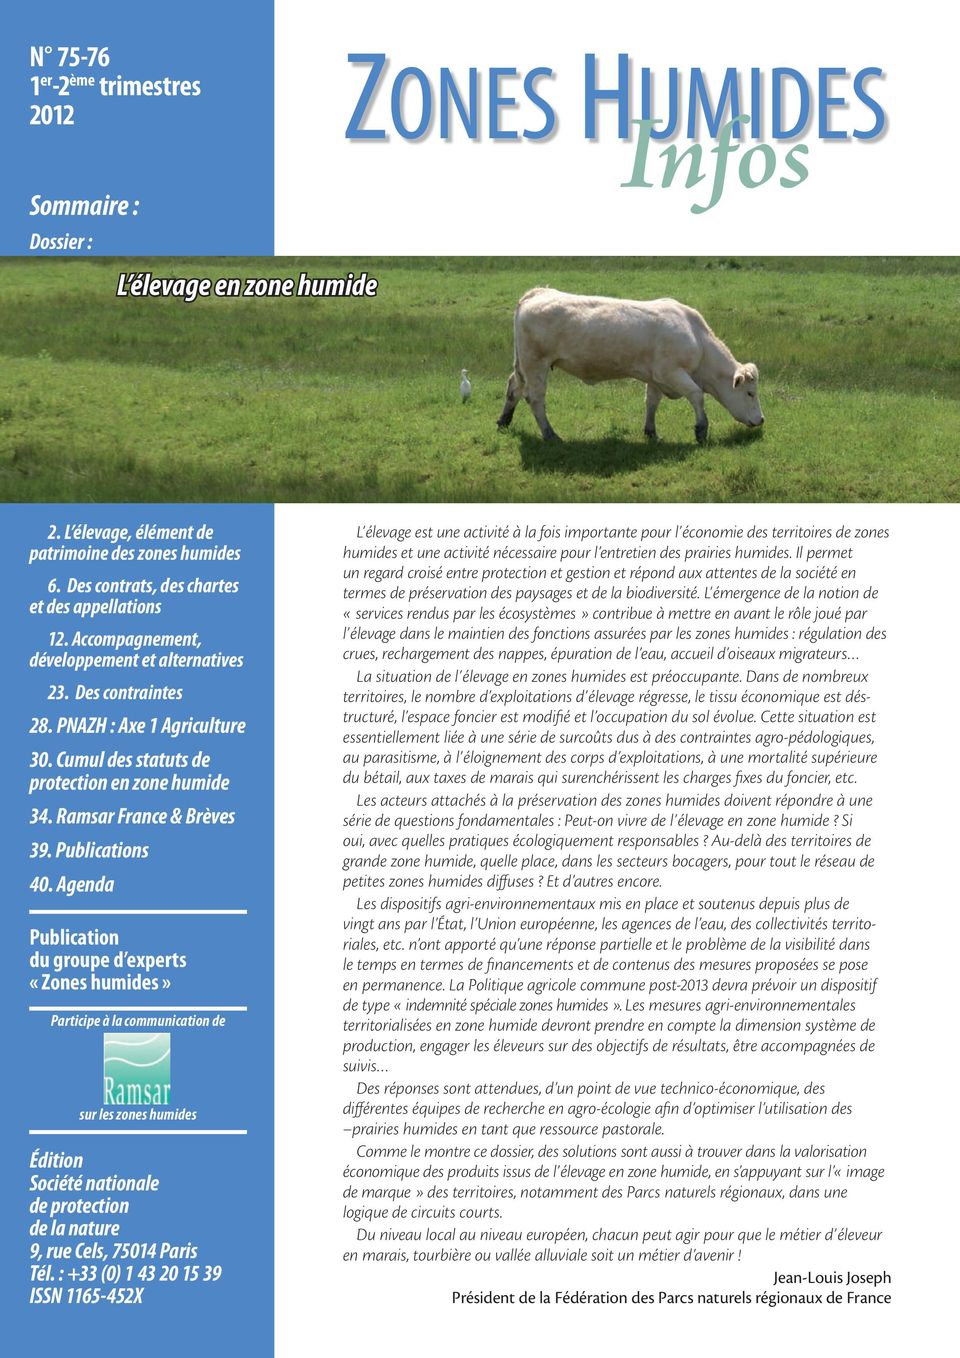 Ramsar France & Brèves 39. Publications 40.